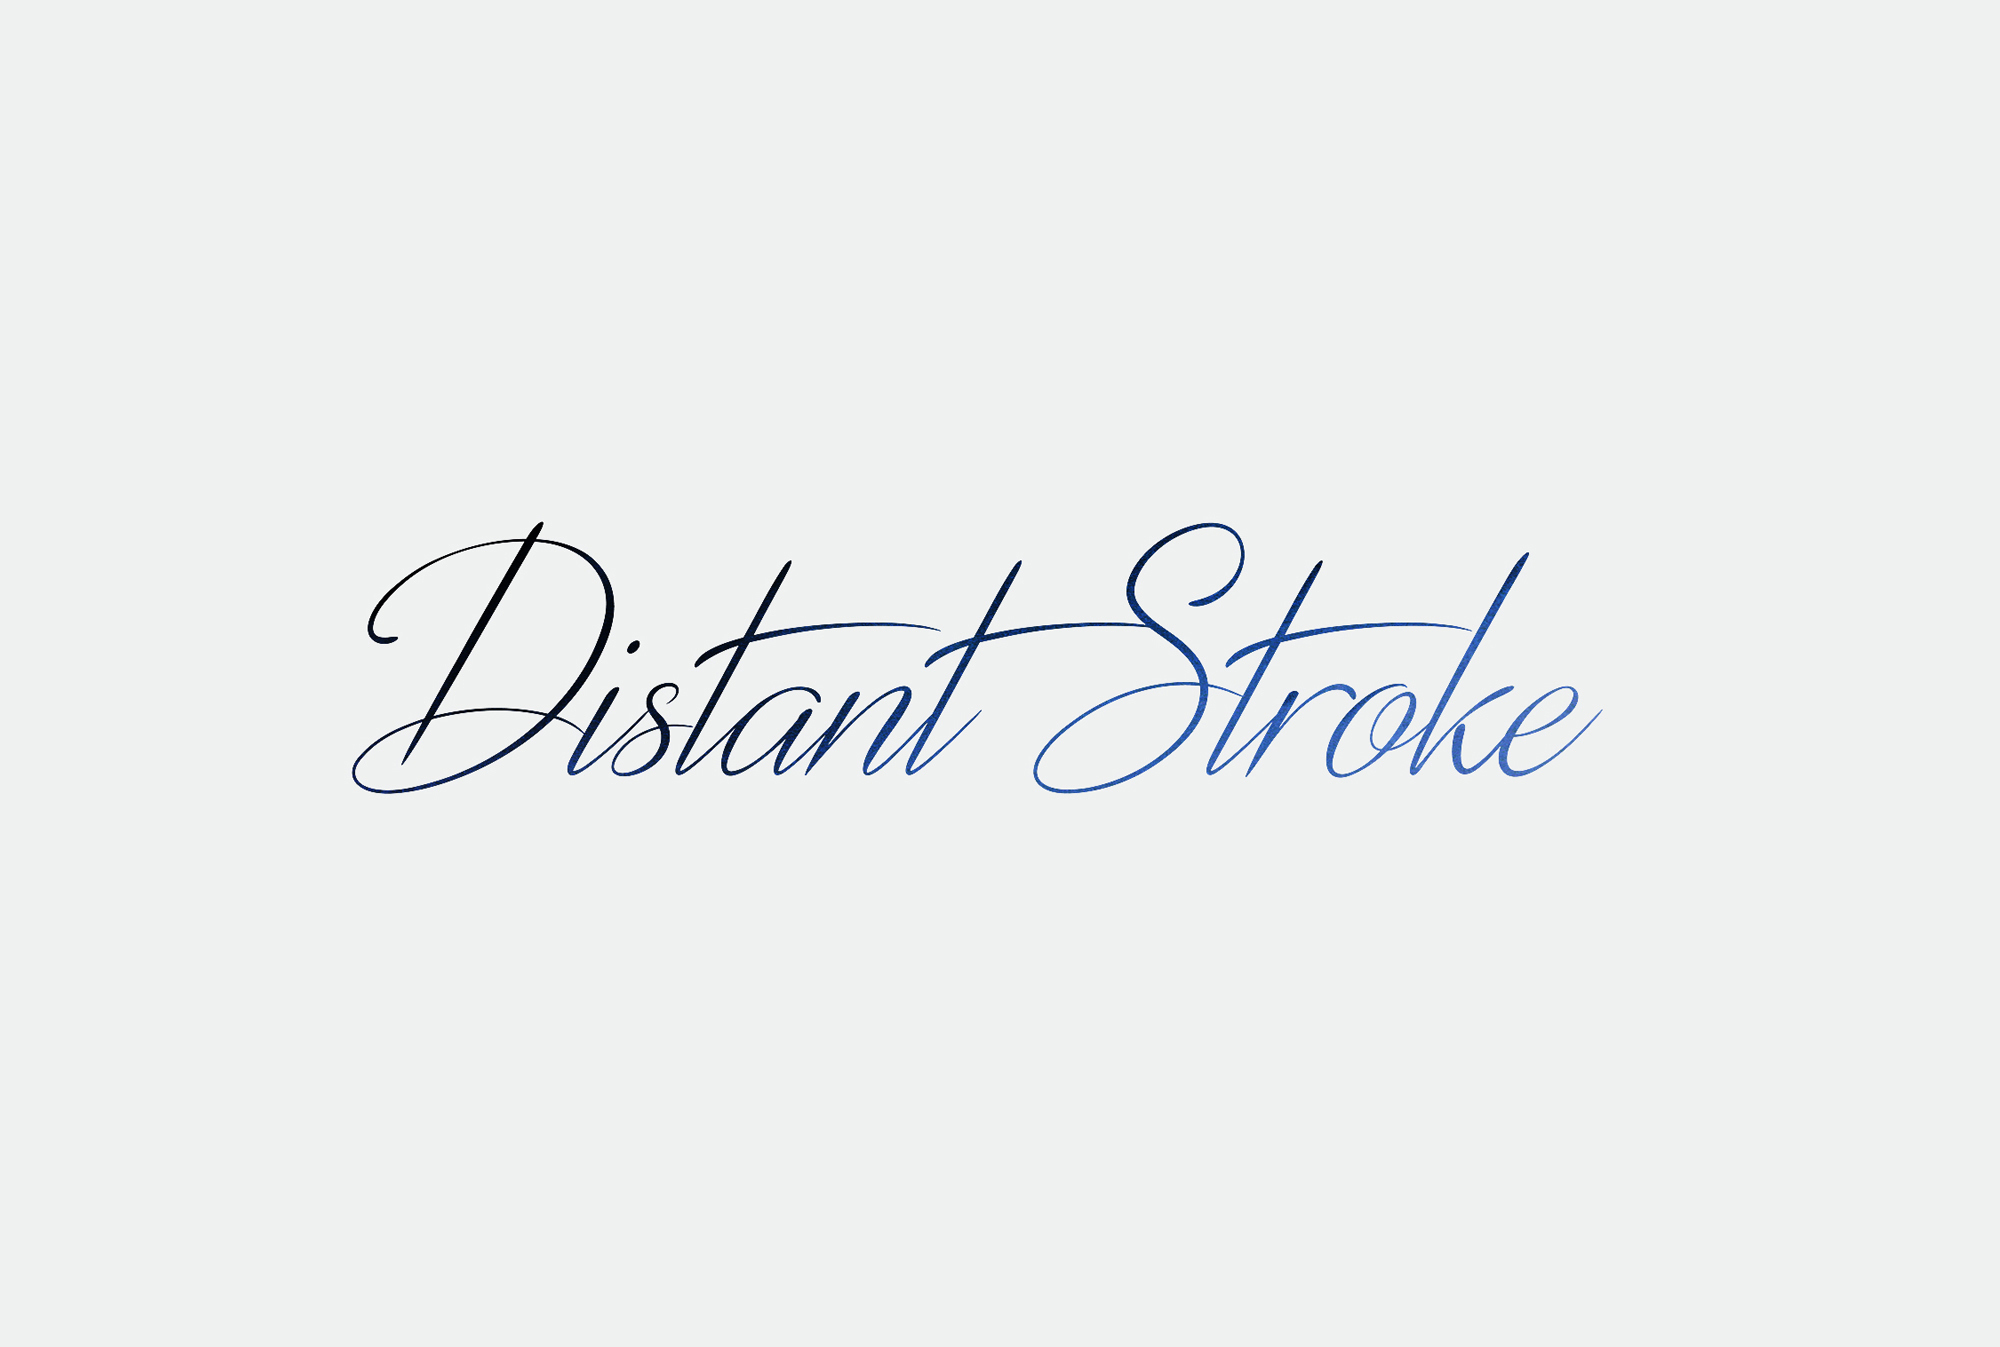 Distant Stroke